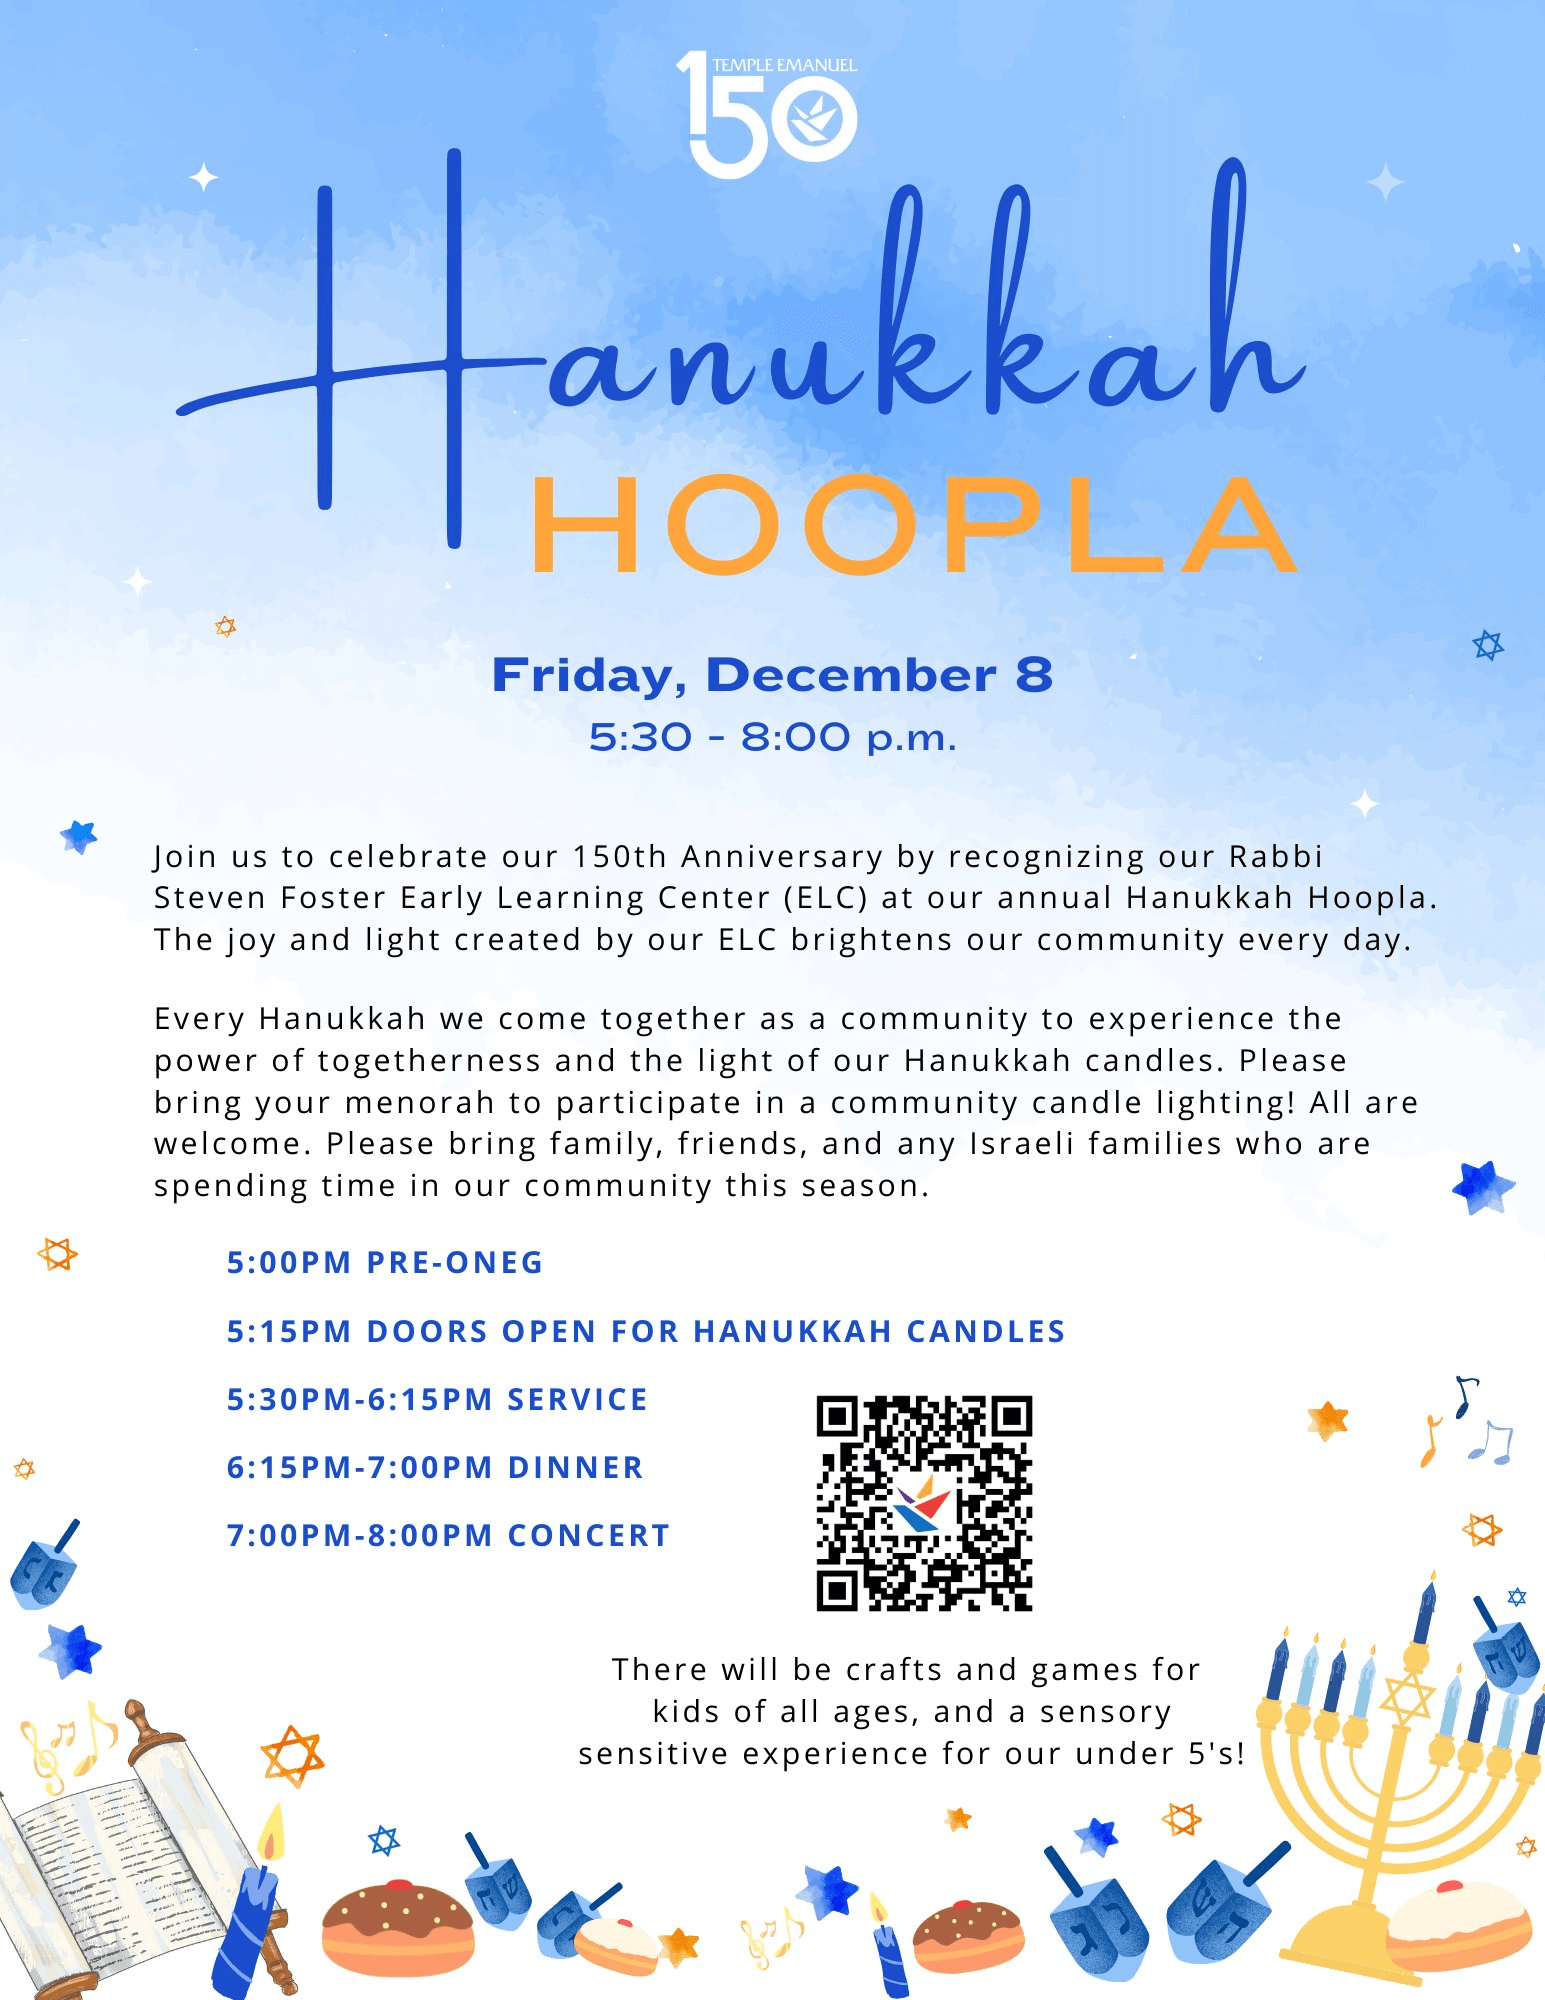 Hanukkah Hoopla at Temple Emanuel